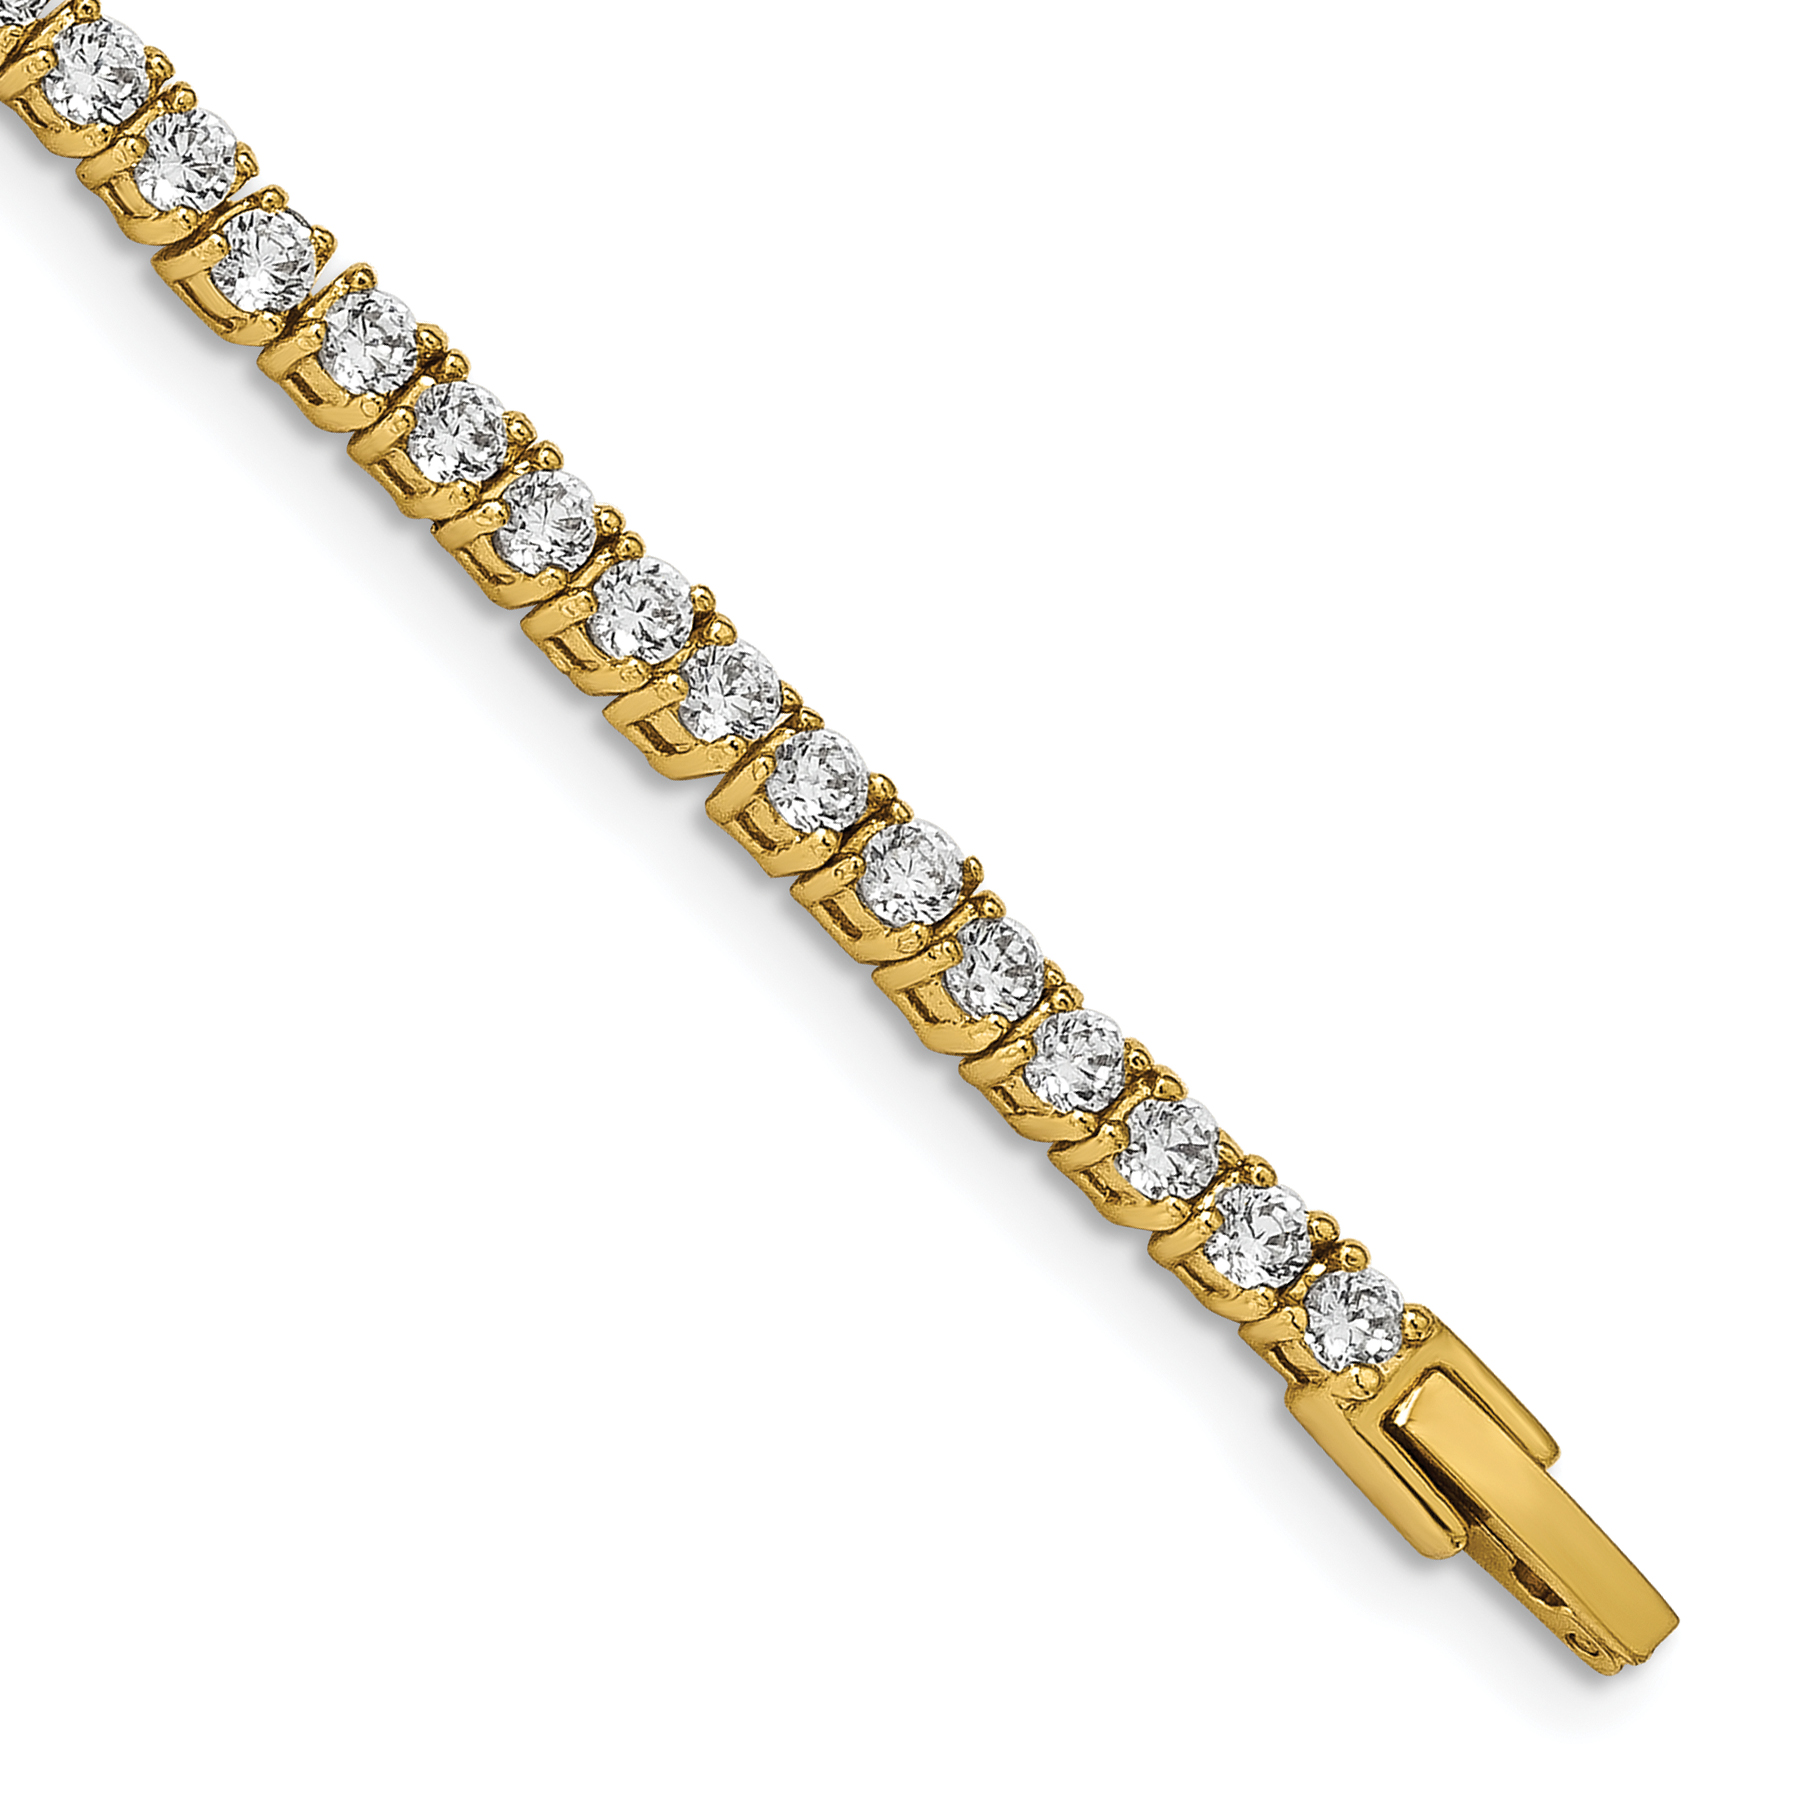 14k Yellow Gold 1.50TCW Diamond Tennis Bracelet 7.5” length | eBay